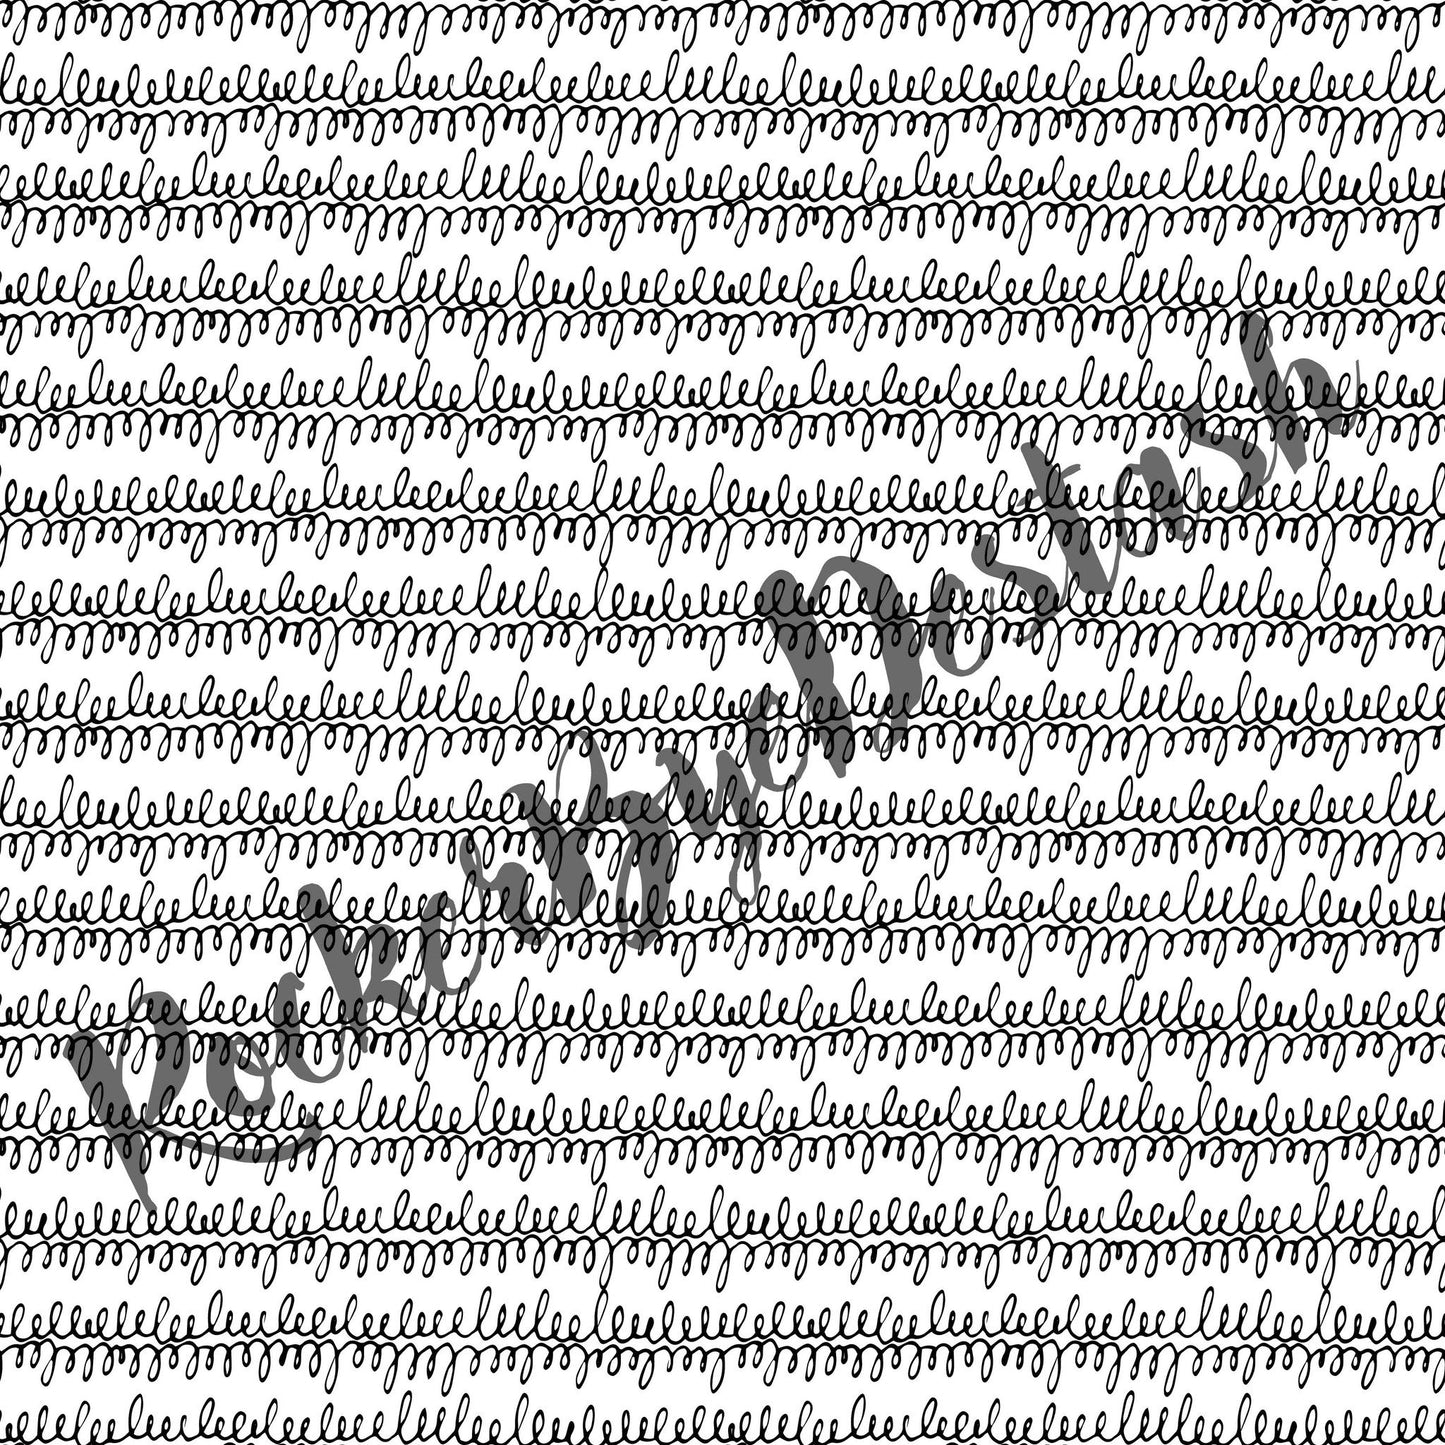 RETAIL - Cotton Double Gauze ACCENT prints - 1 yard per quantity Coordinate designs Black and white